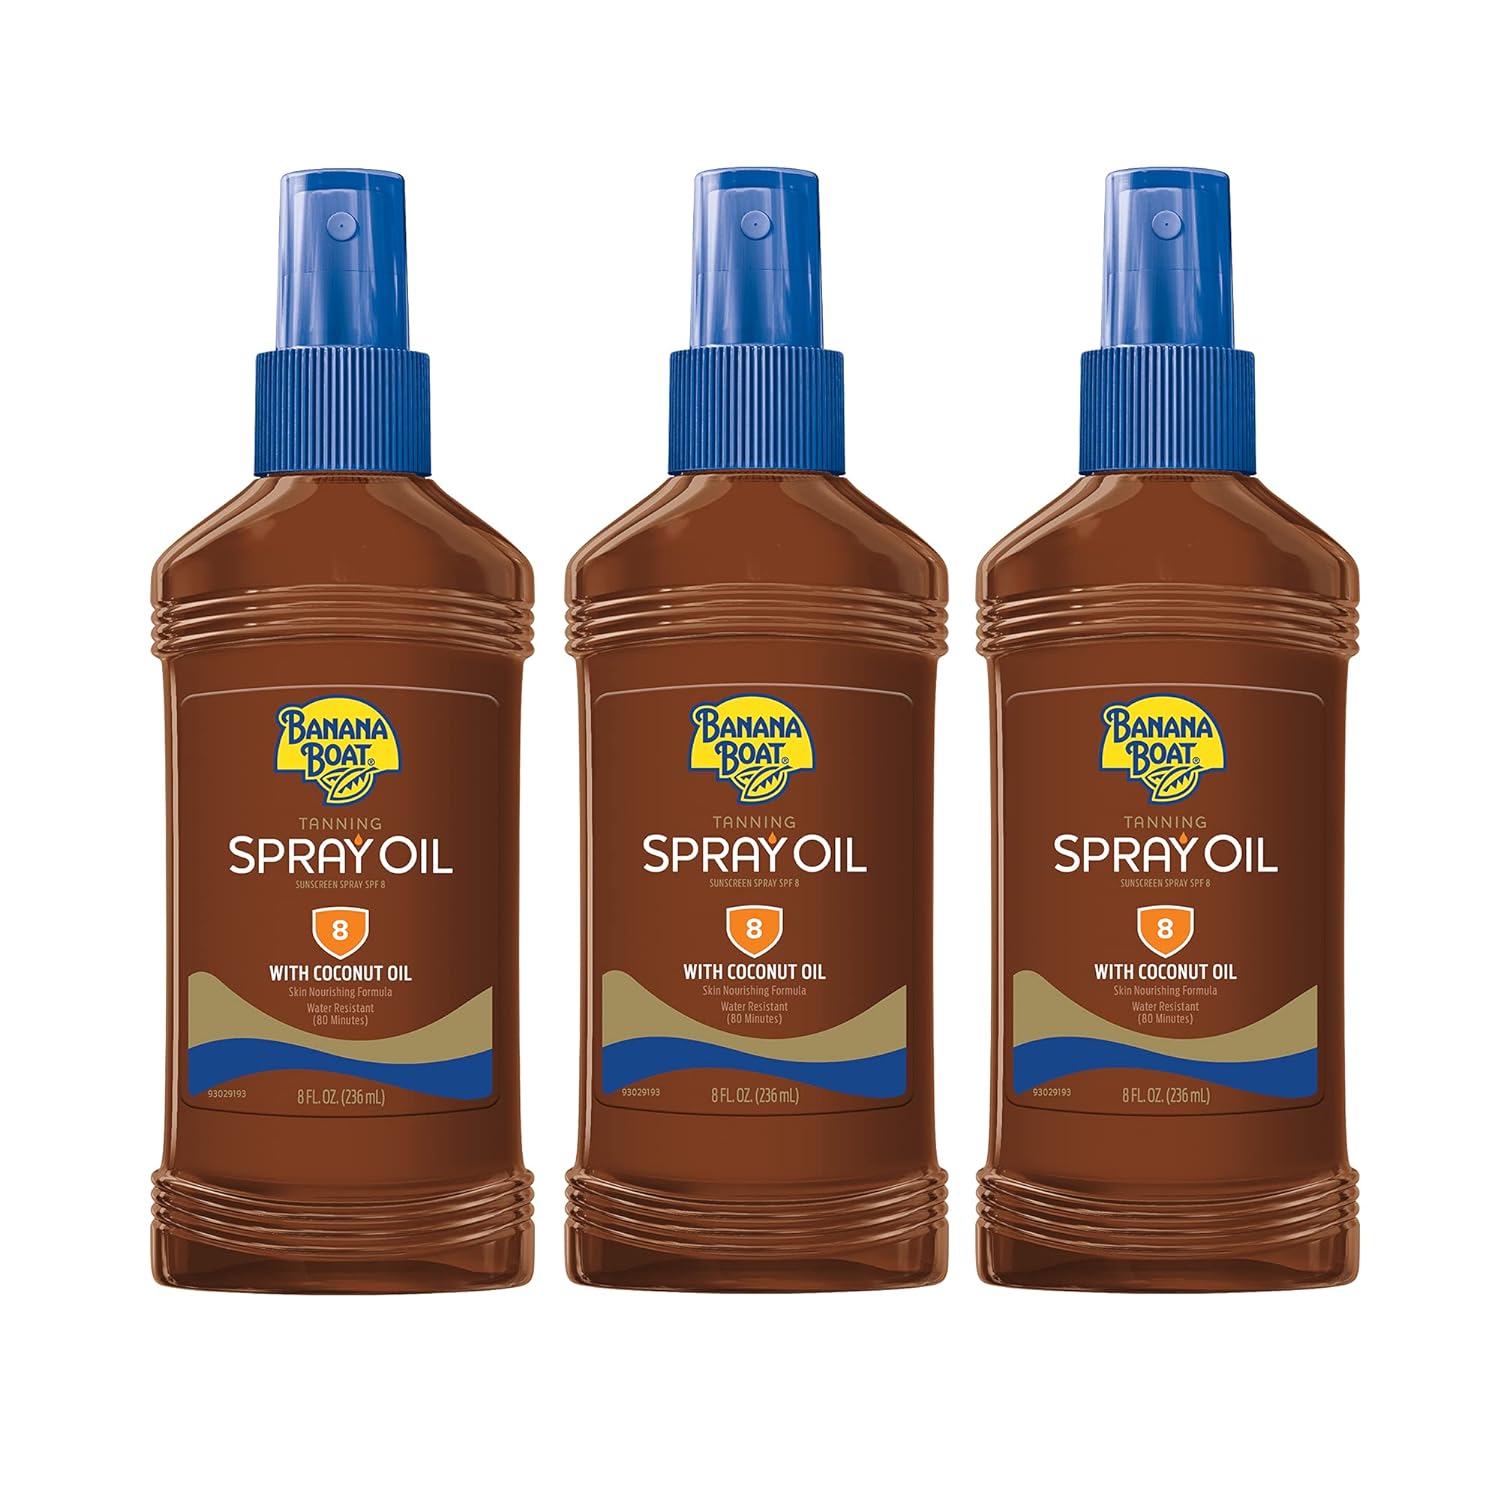 Banana Boat Tanning Oil Pump Spray Sunscreen SPF 8, 8oz | SPF Tanning Oil, Outdoor Tanning Oil SPF 8, Oxybenzone Free Sunscreen, Banana Boat Spray Oil SPF 8, 8oz (Pack of 3)